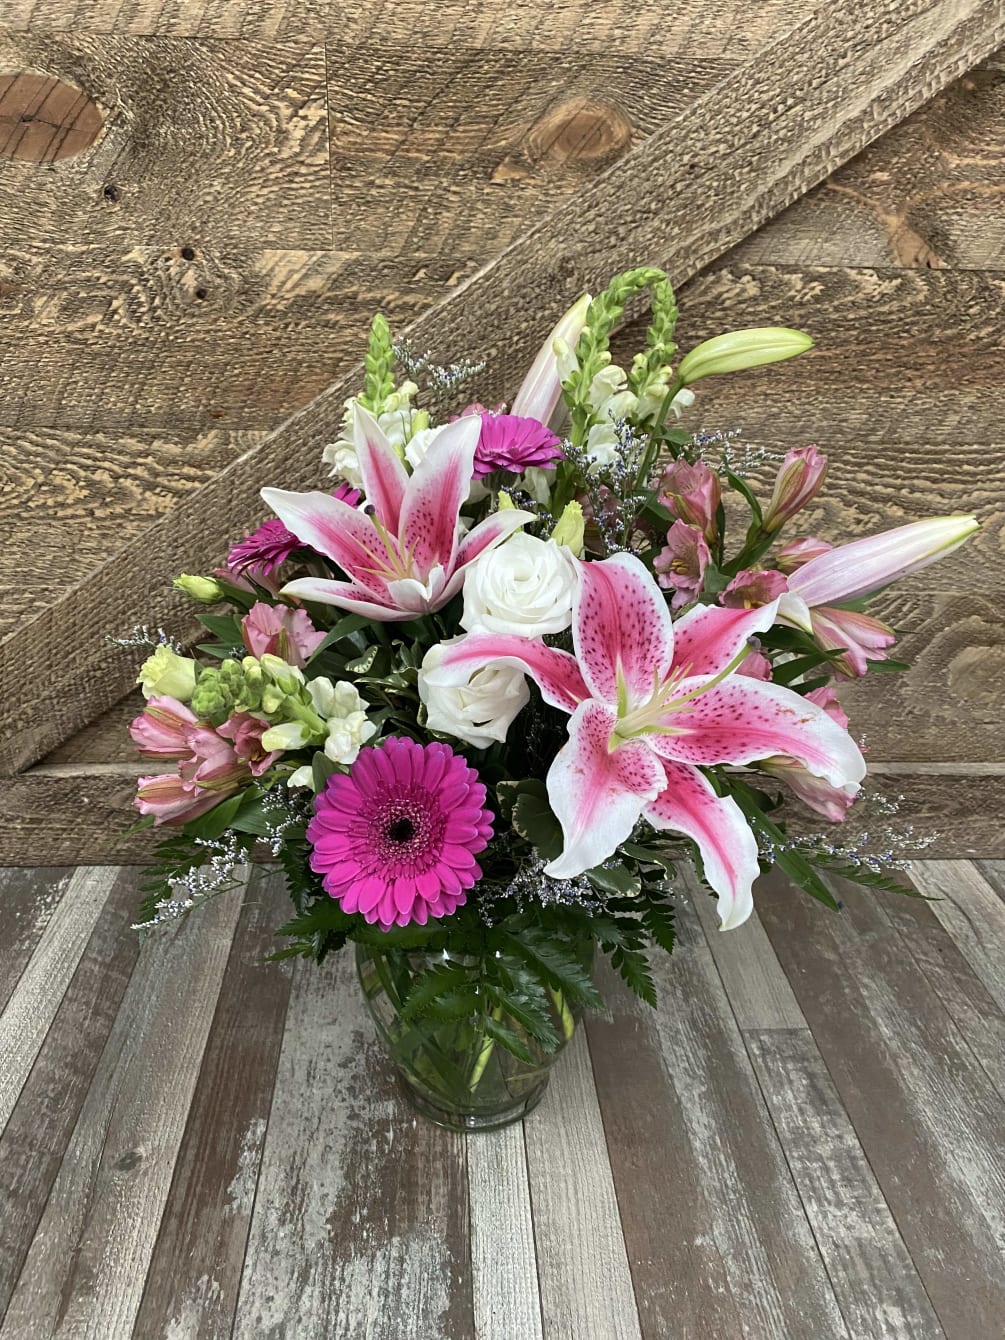 This vase arrangement includes an assortment of pink shades. Beautiful lilies, gerbera